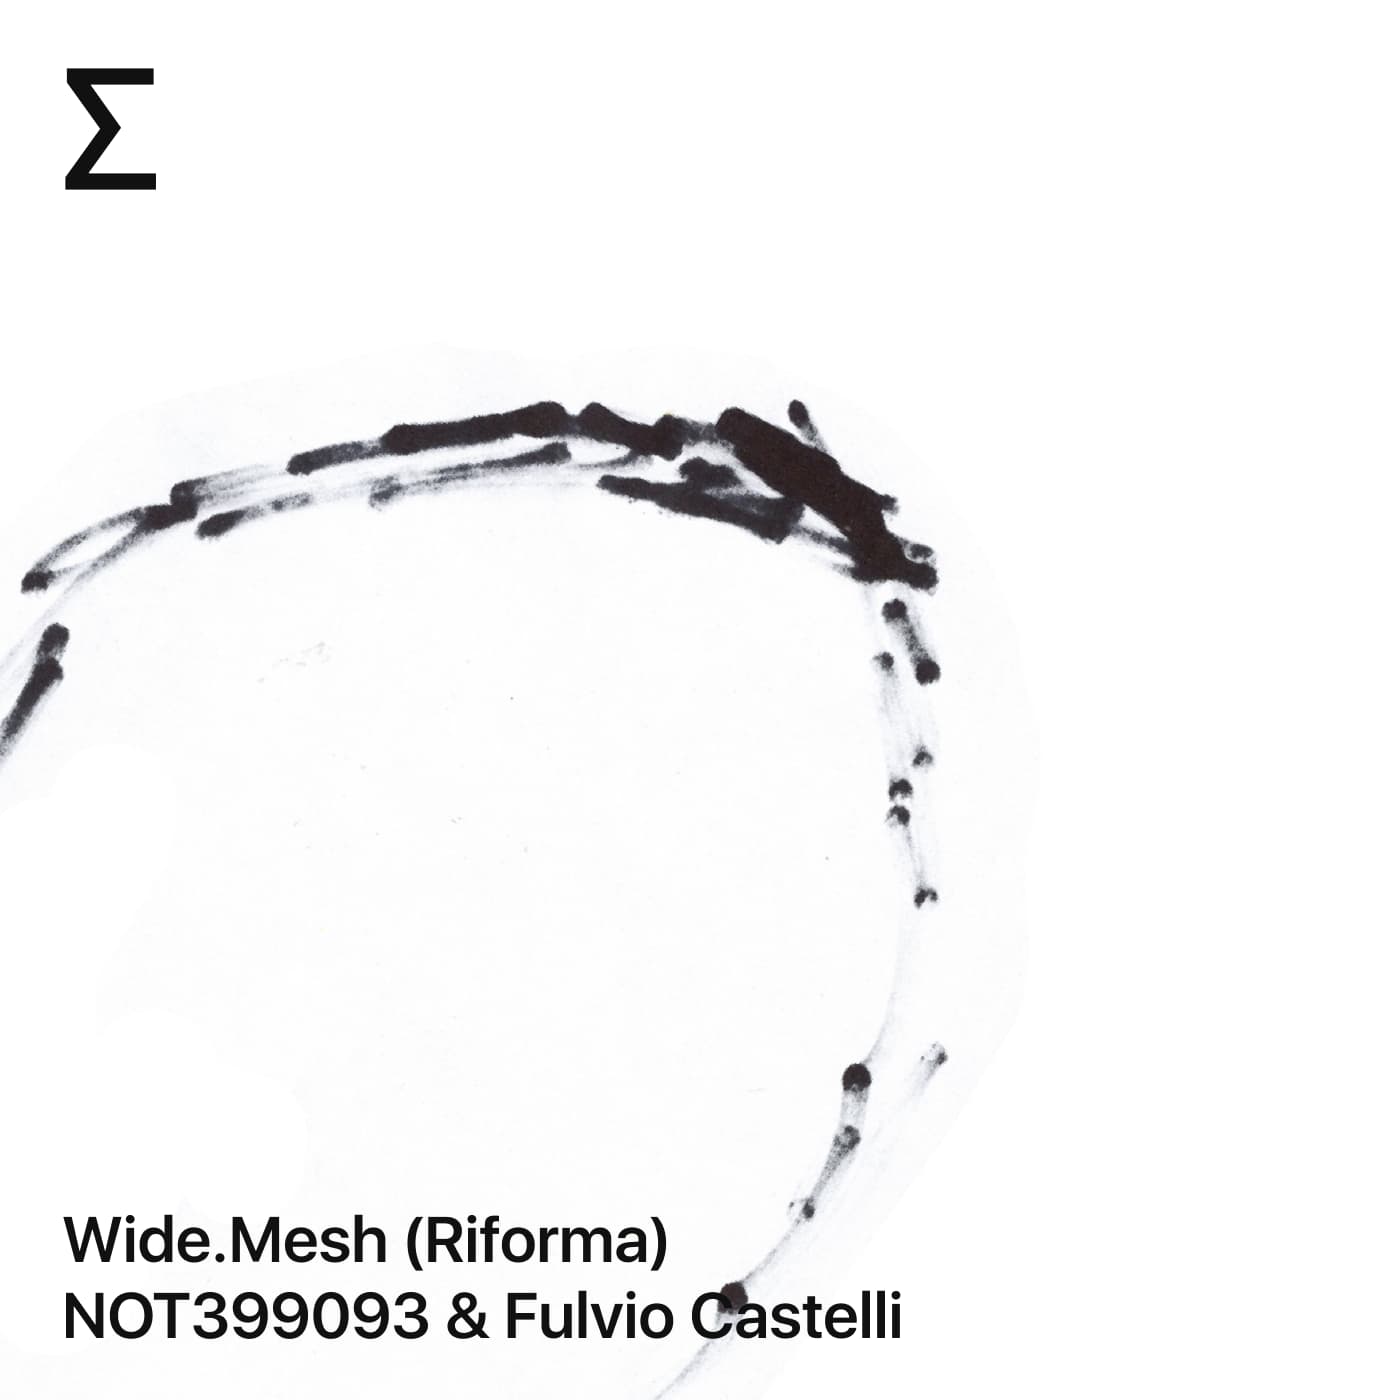 Wide.Mesh (Riforma) – NOT399093 & Fulvio Castelli